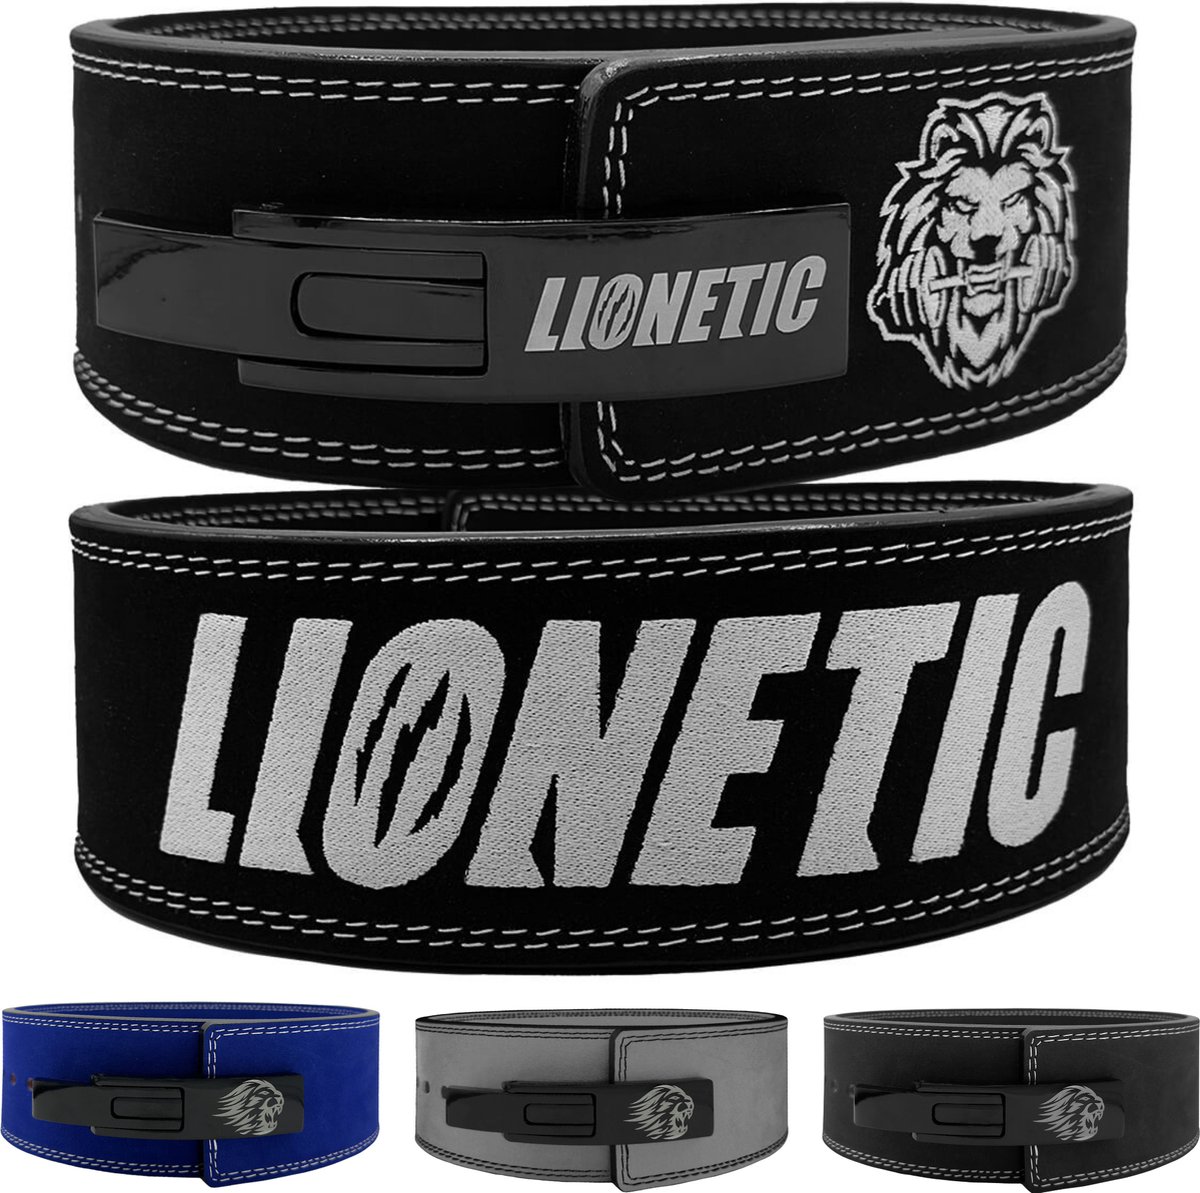 Lionetic Lifting Belt - Powerlifting Lever Belt - Powerliftig Riem - Halterriem - Lever Belt - Powerlifting/Bodybuilding - Krachttraining Accessoires – Lionetic Evolution – XL